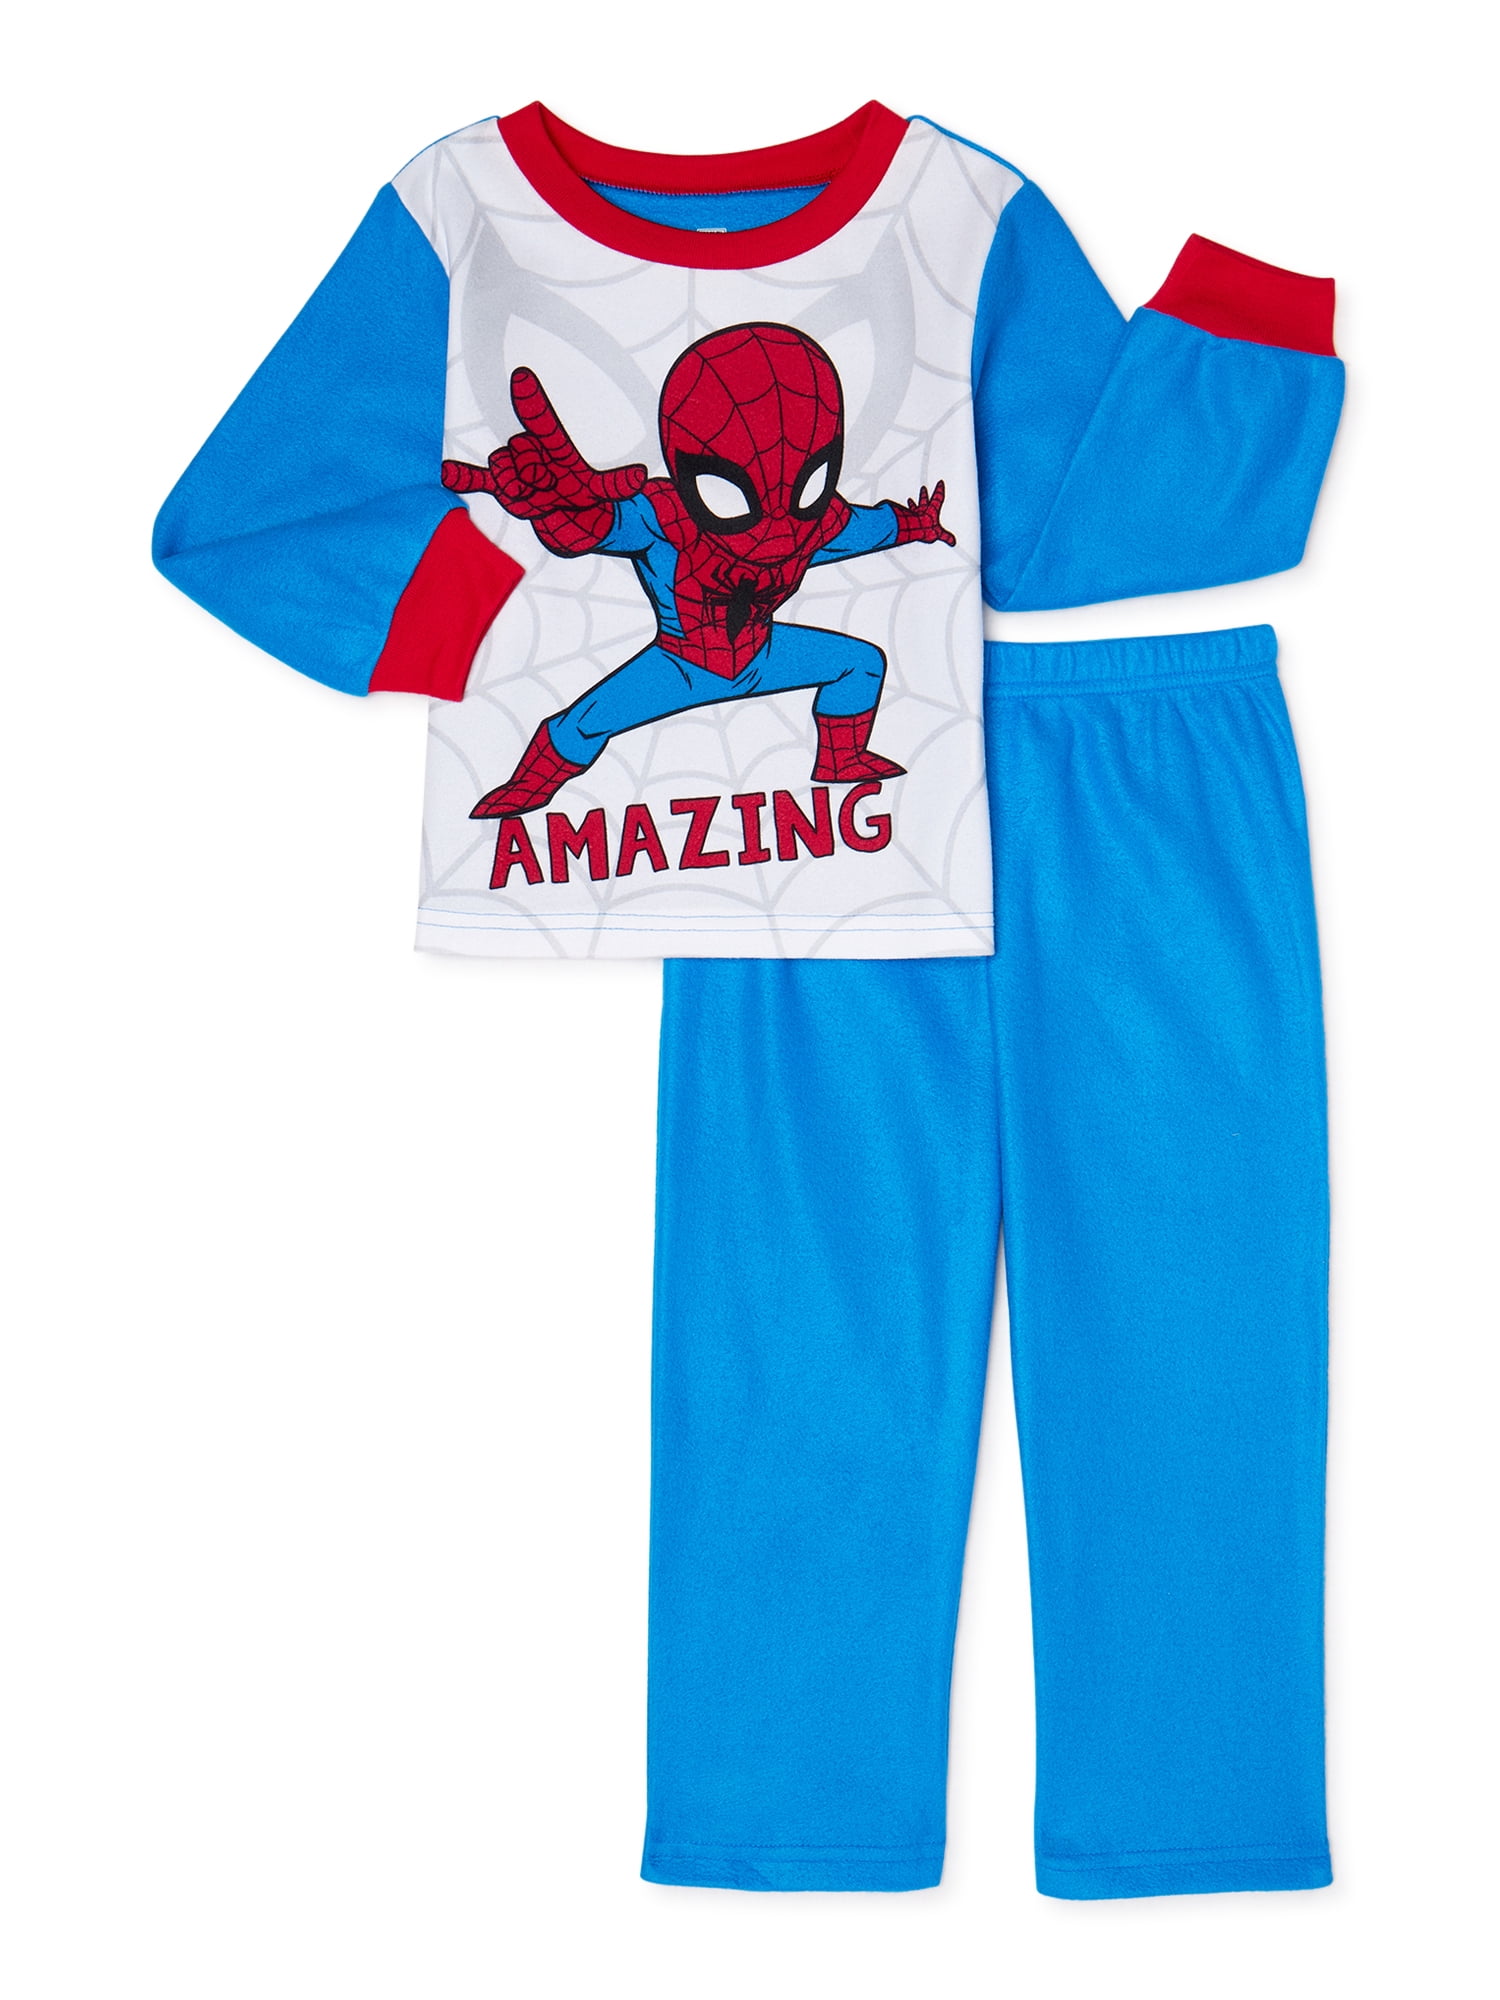 Spider-Man Boys Pyjamas Marvel Nightwear Sizes 18mths to 5 Years 